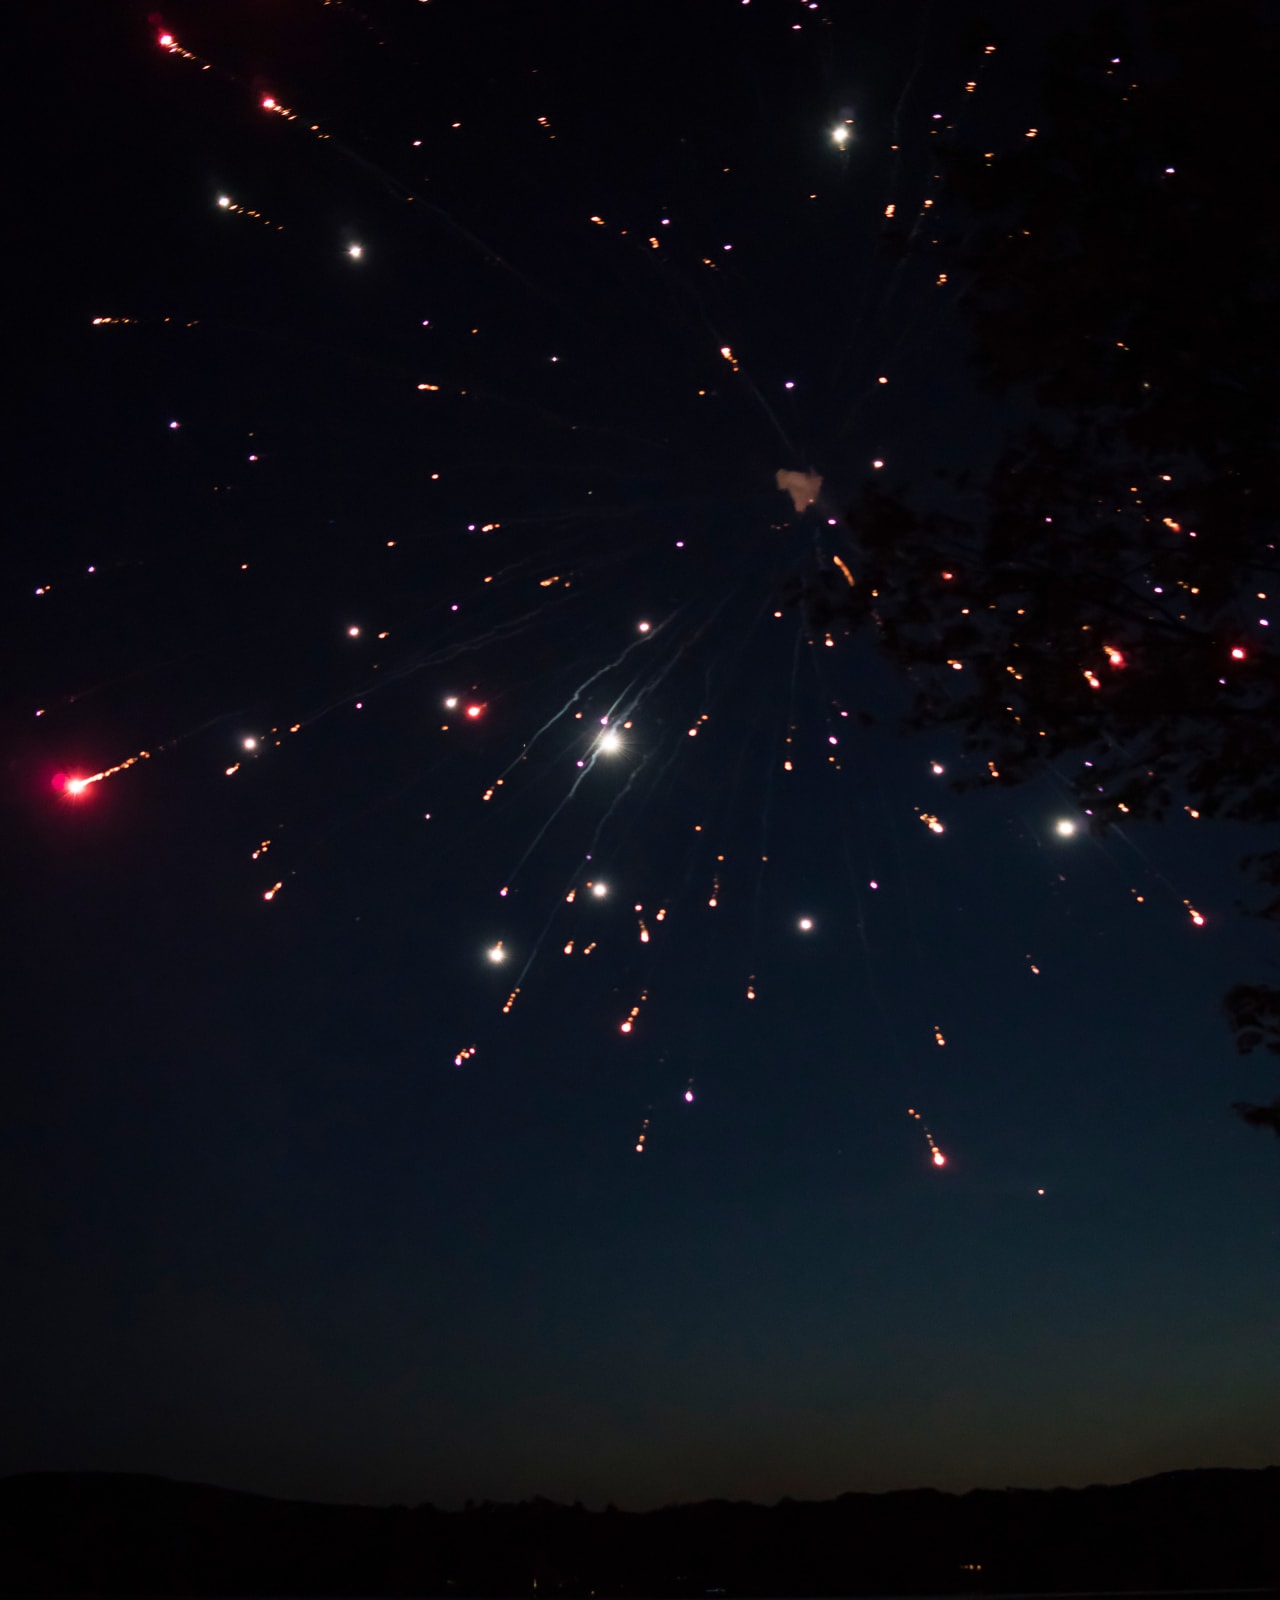 Cig Harvey, Fireworks Over The Lake, 2018